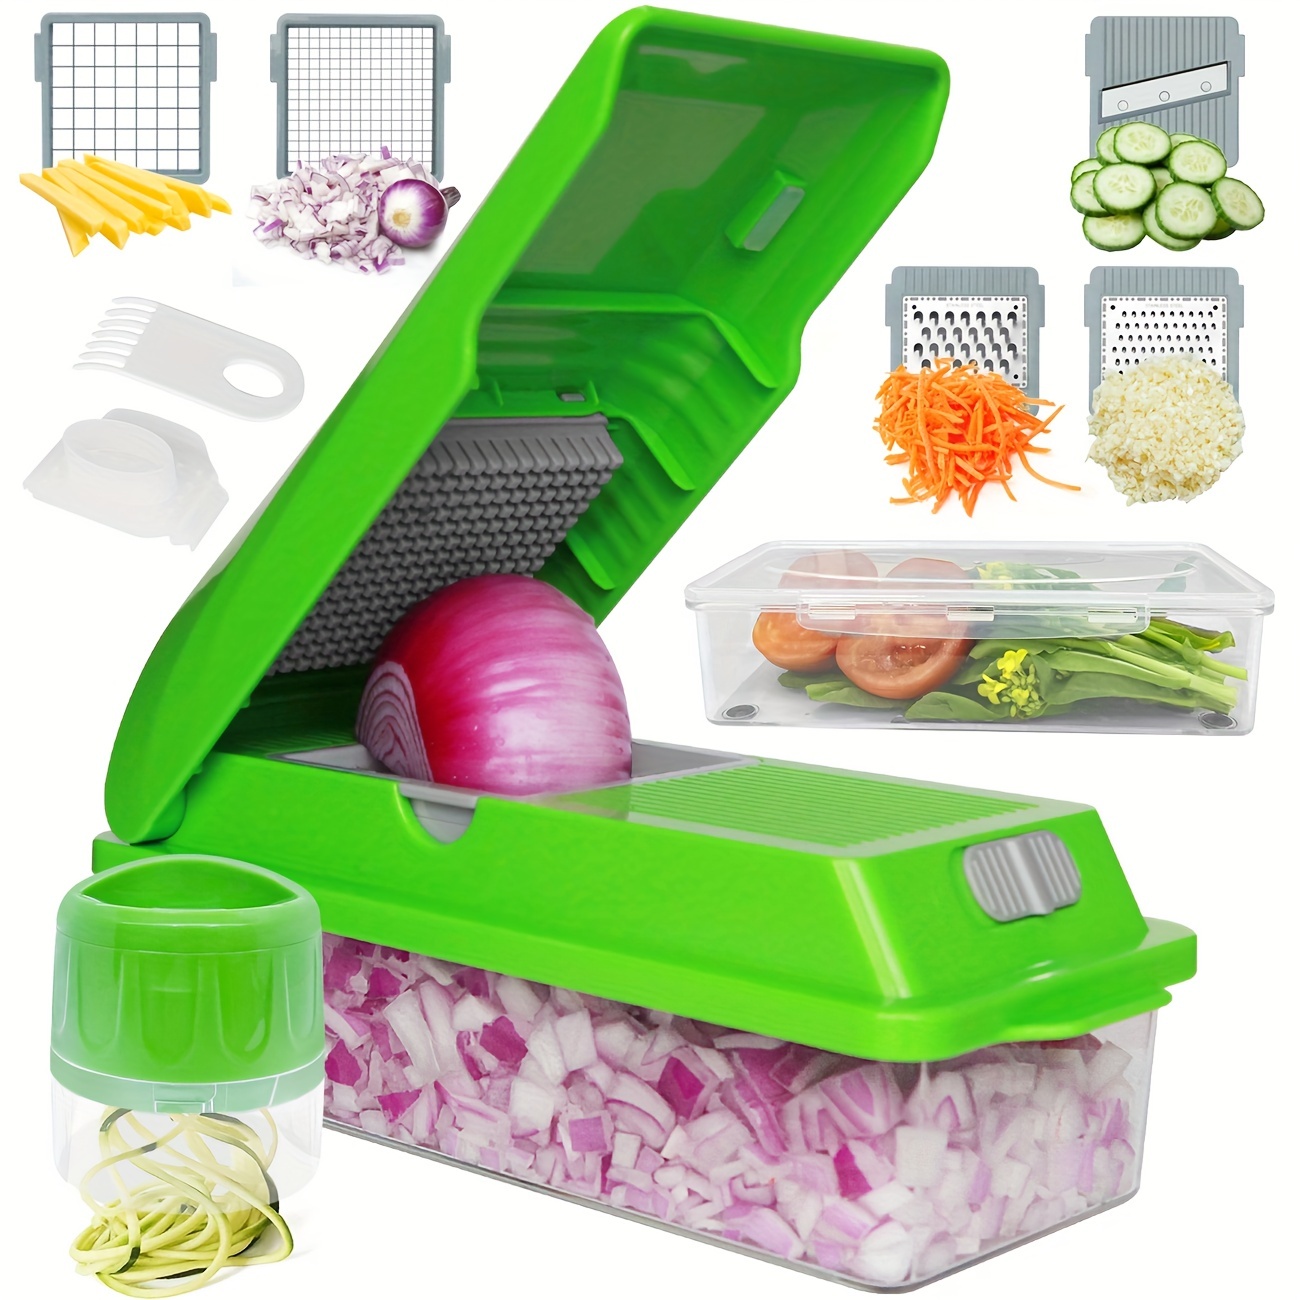 Vegetable Chopper, Pro Onion Chopper, Multifunctional 13 in 1 Food